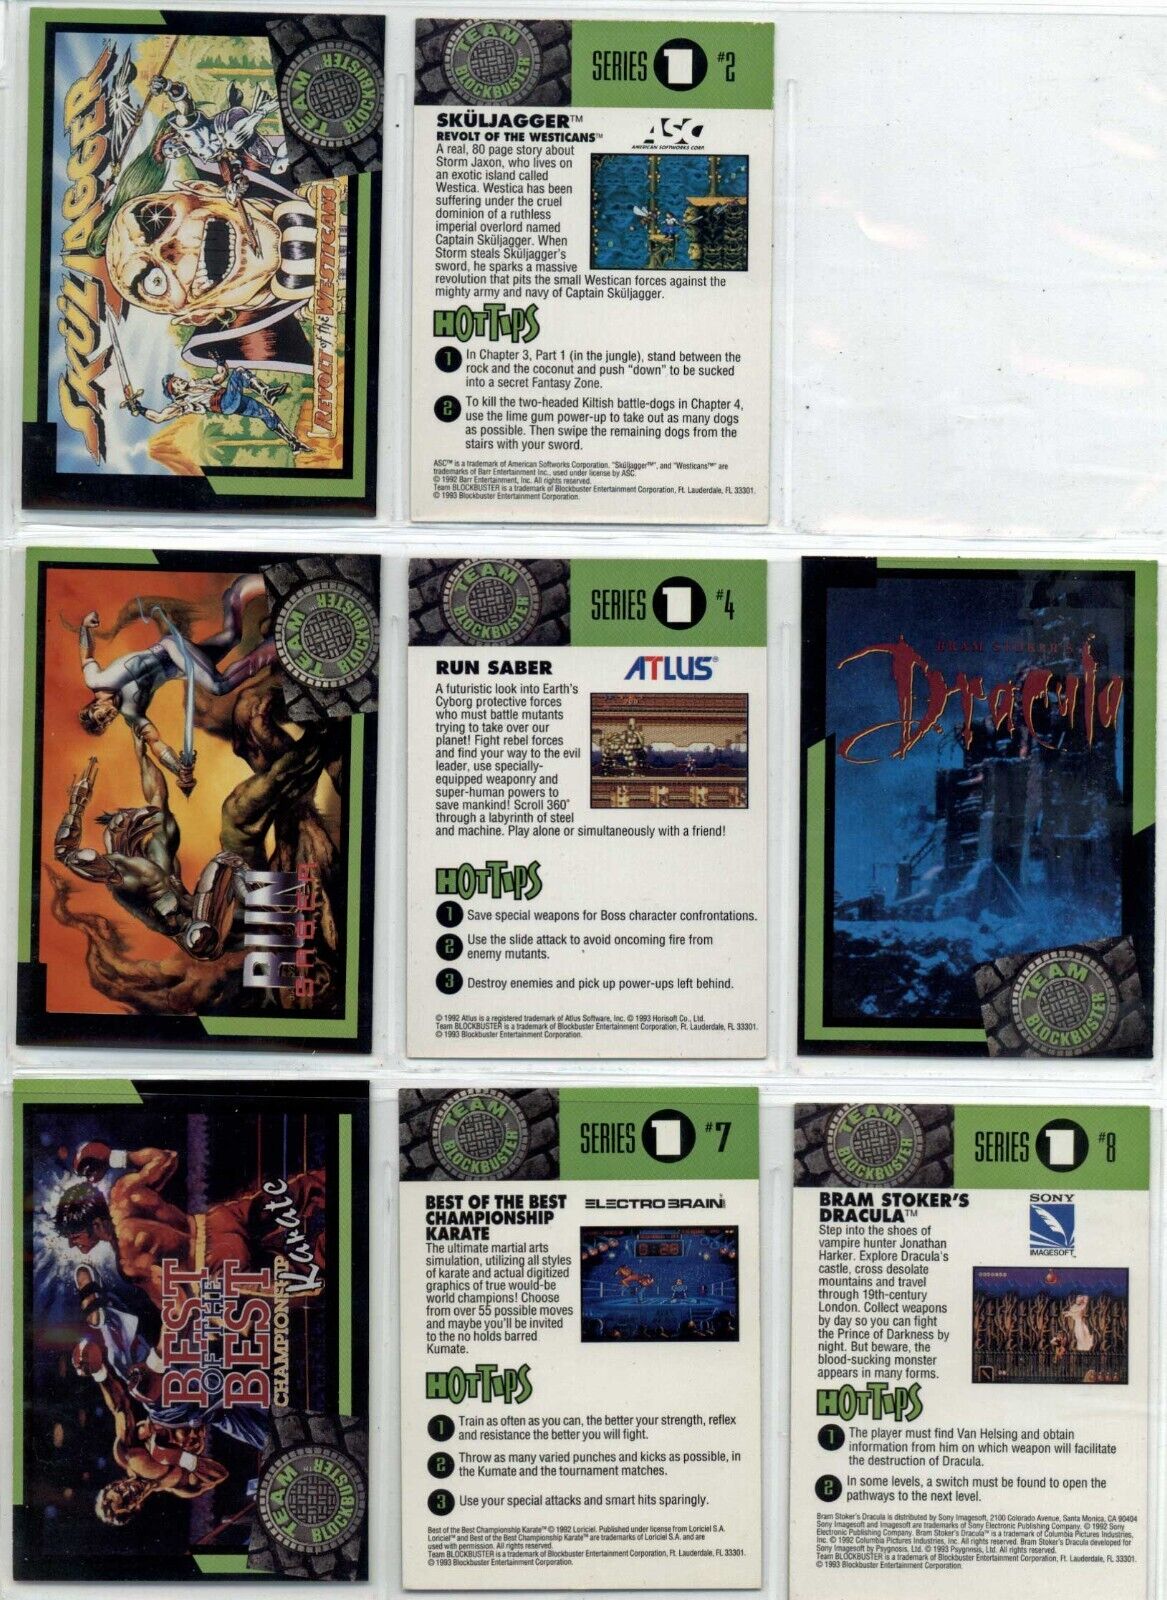 1993 Team Blockbuster - Video Games card lot [16 cards]